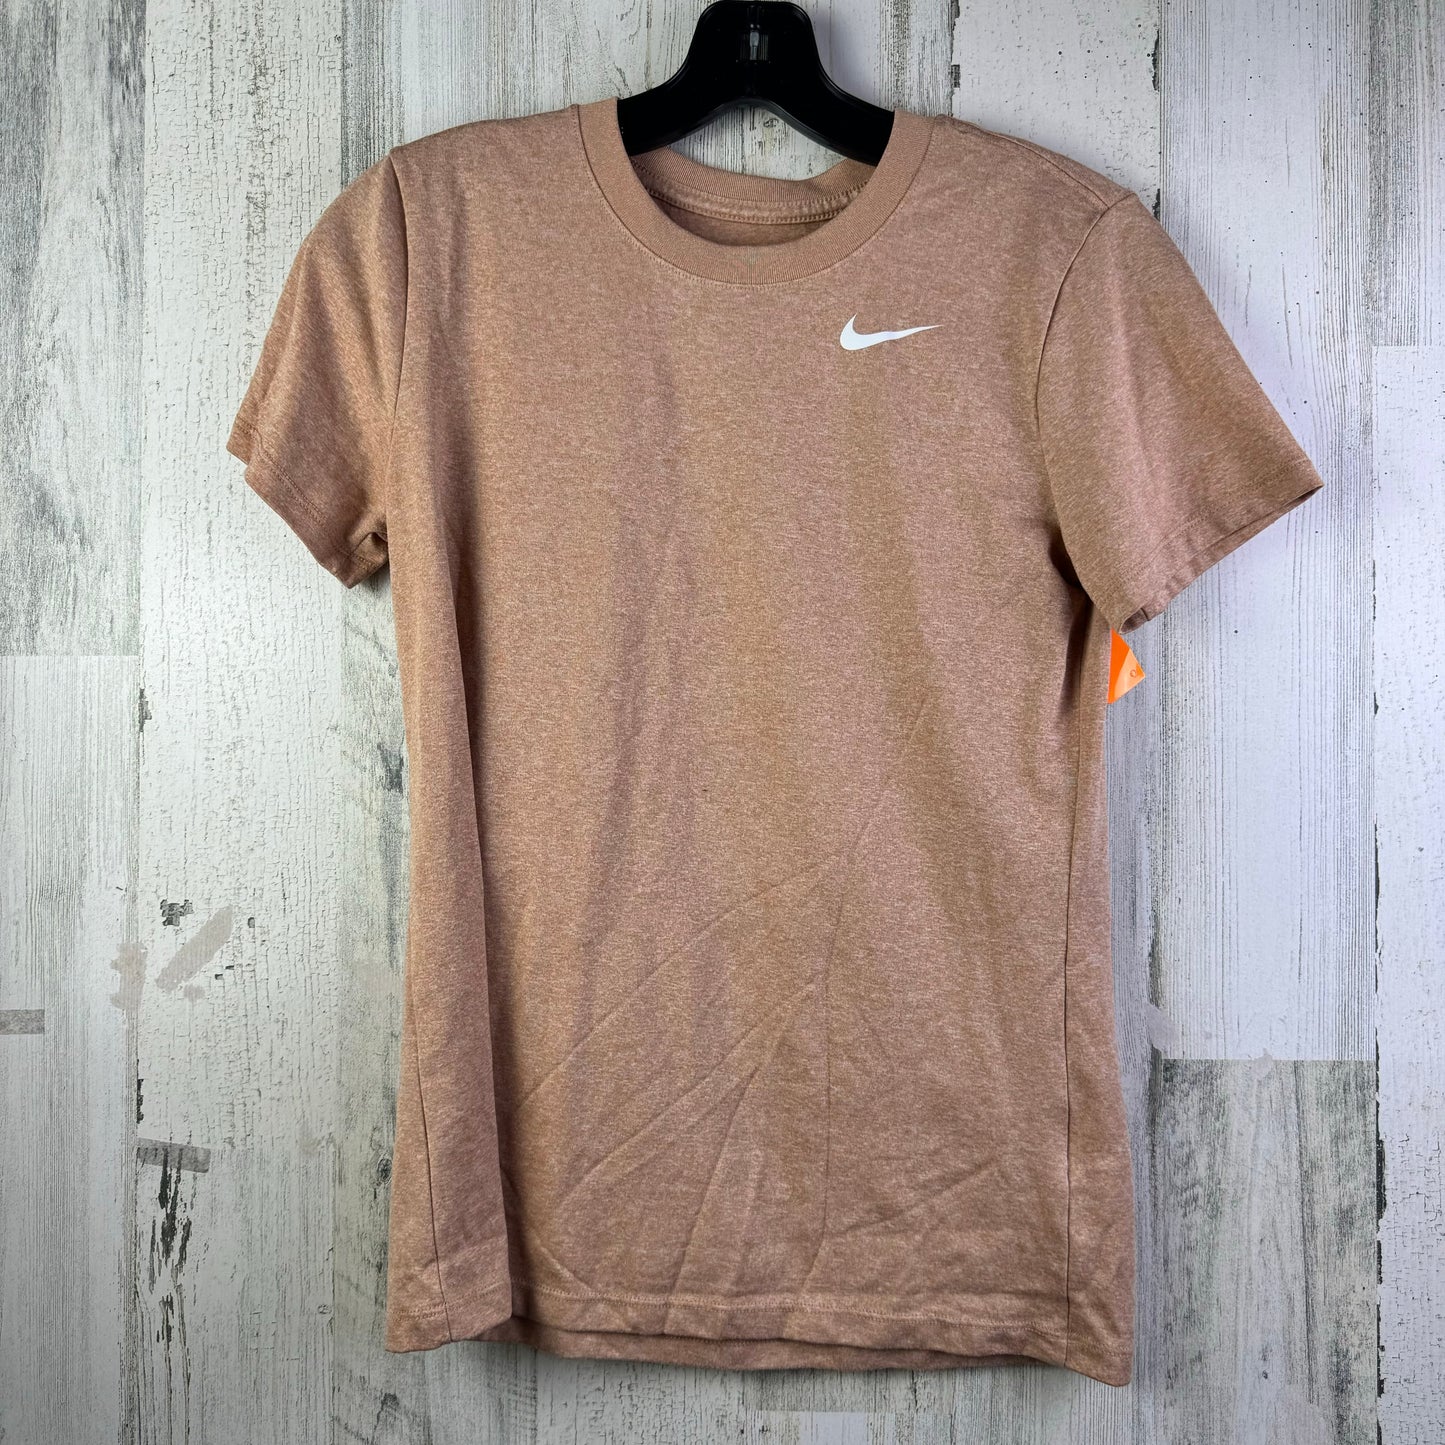 Orange Athletic Top Short Sleeve Nike Apparel, Size S